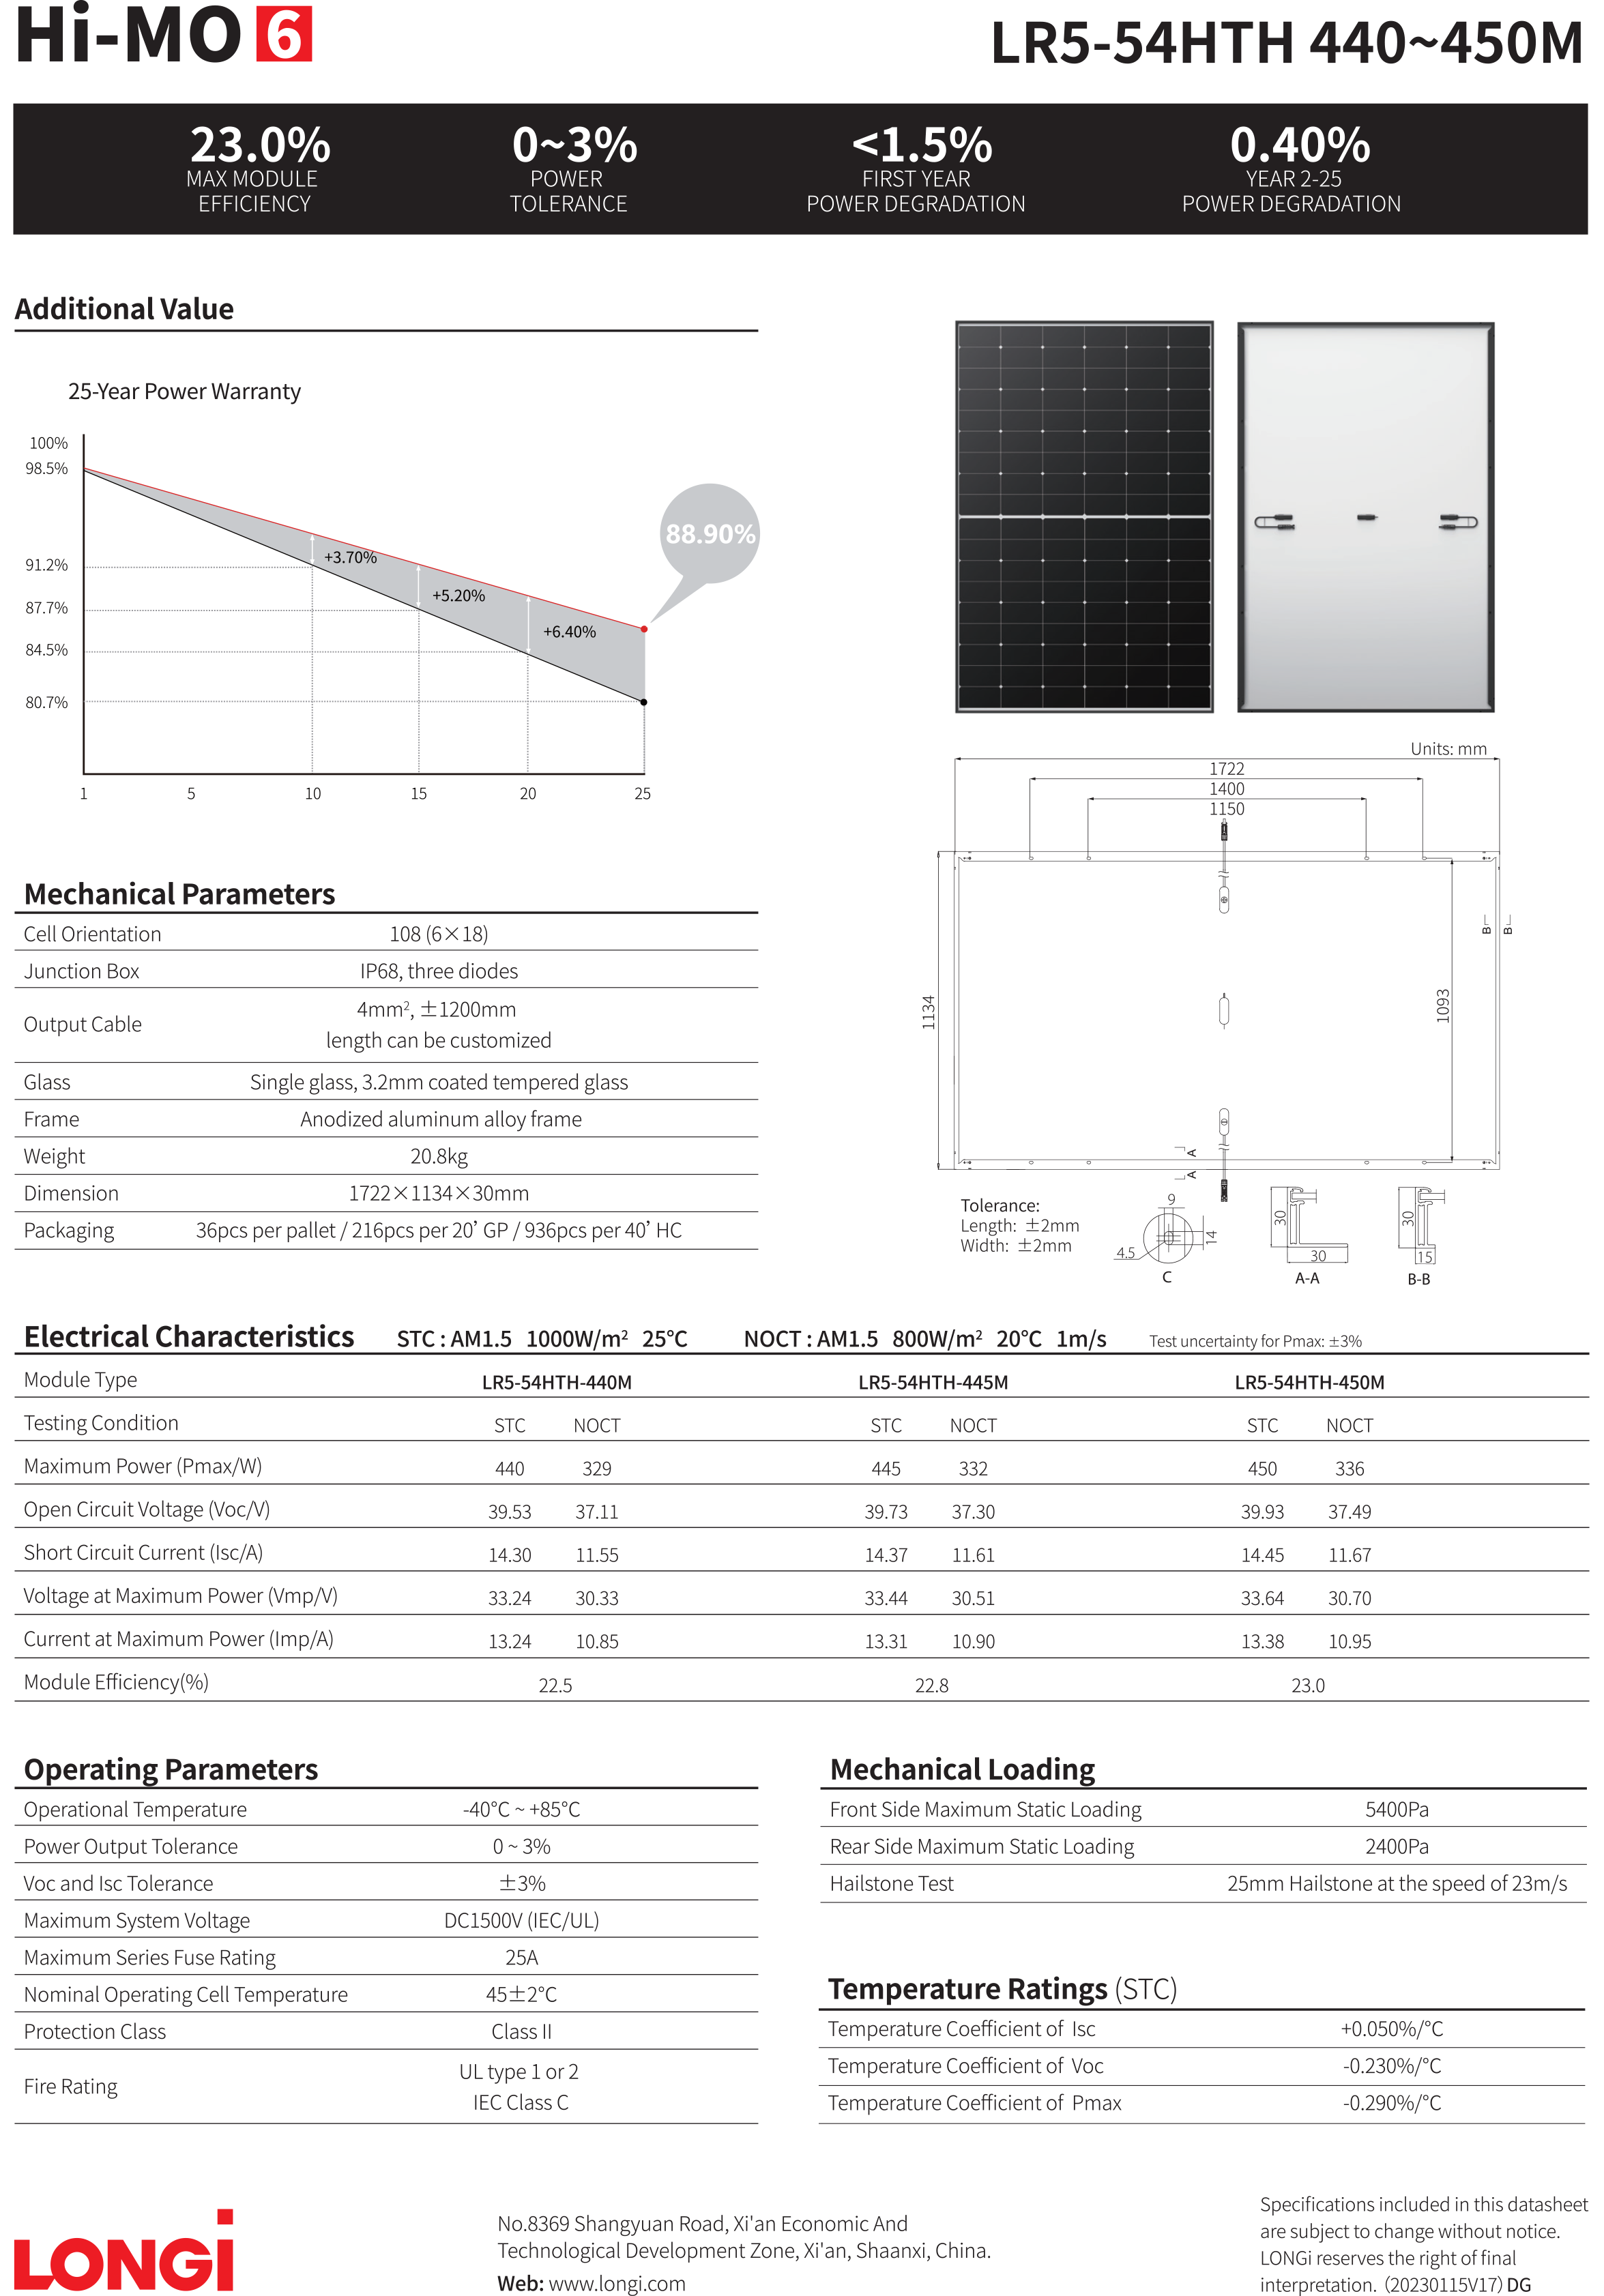 Longi Hi MO 6 440W Solarmodul LR5 54HTH 2